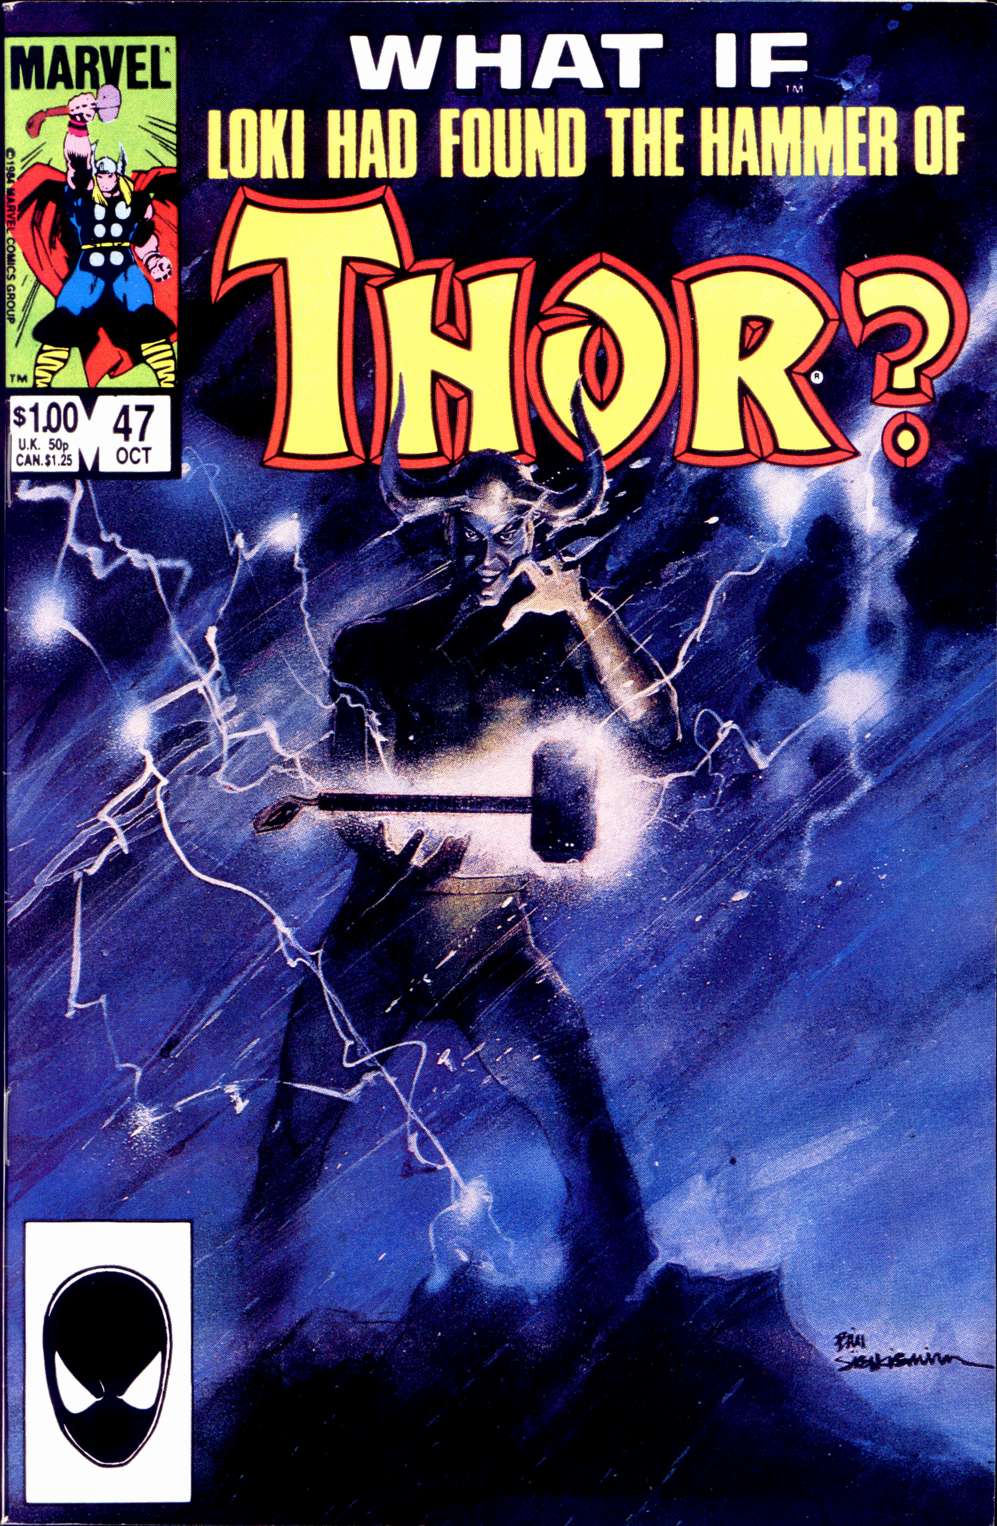 Loki had found the hammer of Thor